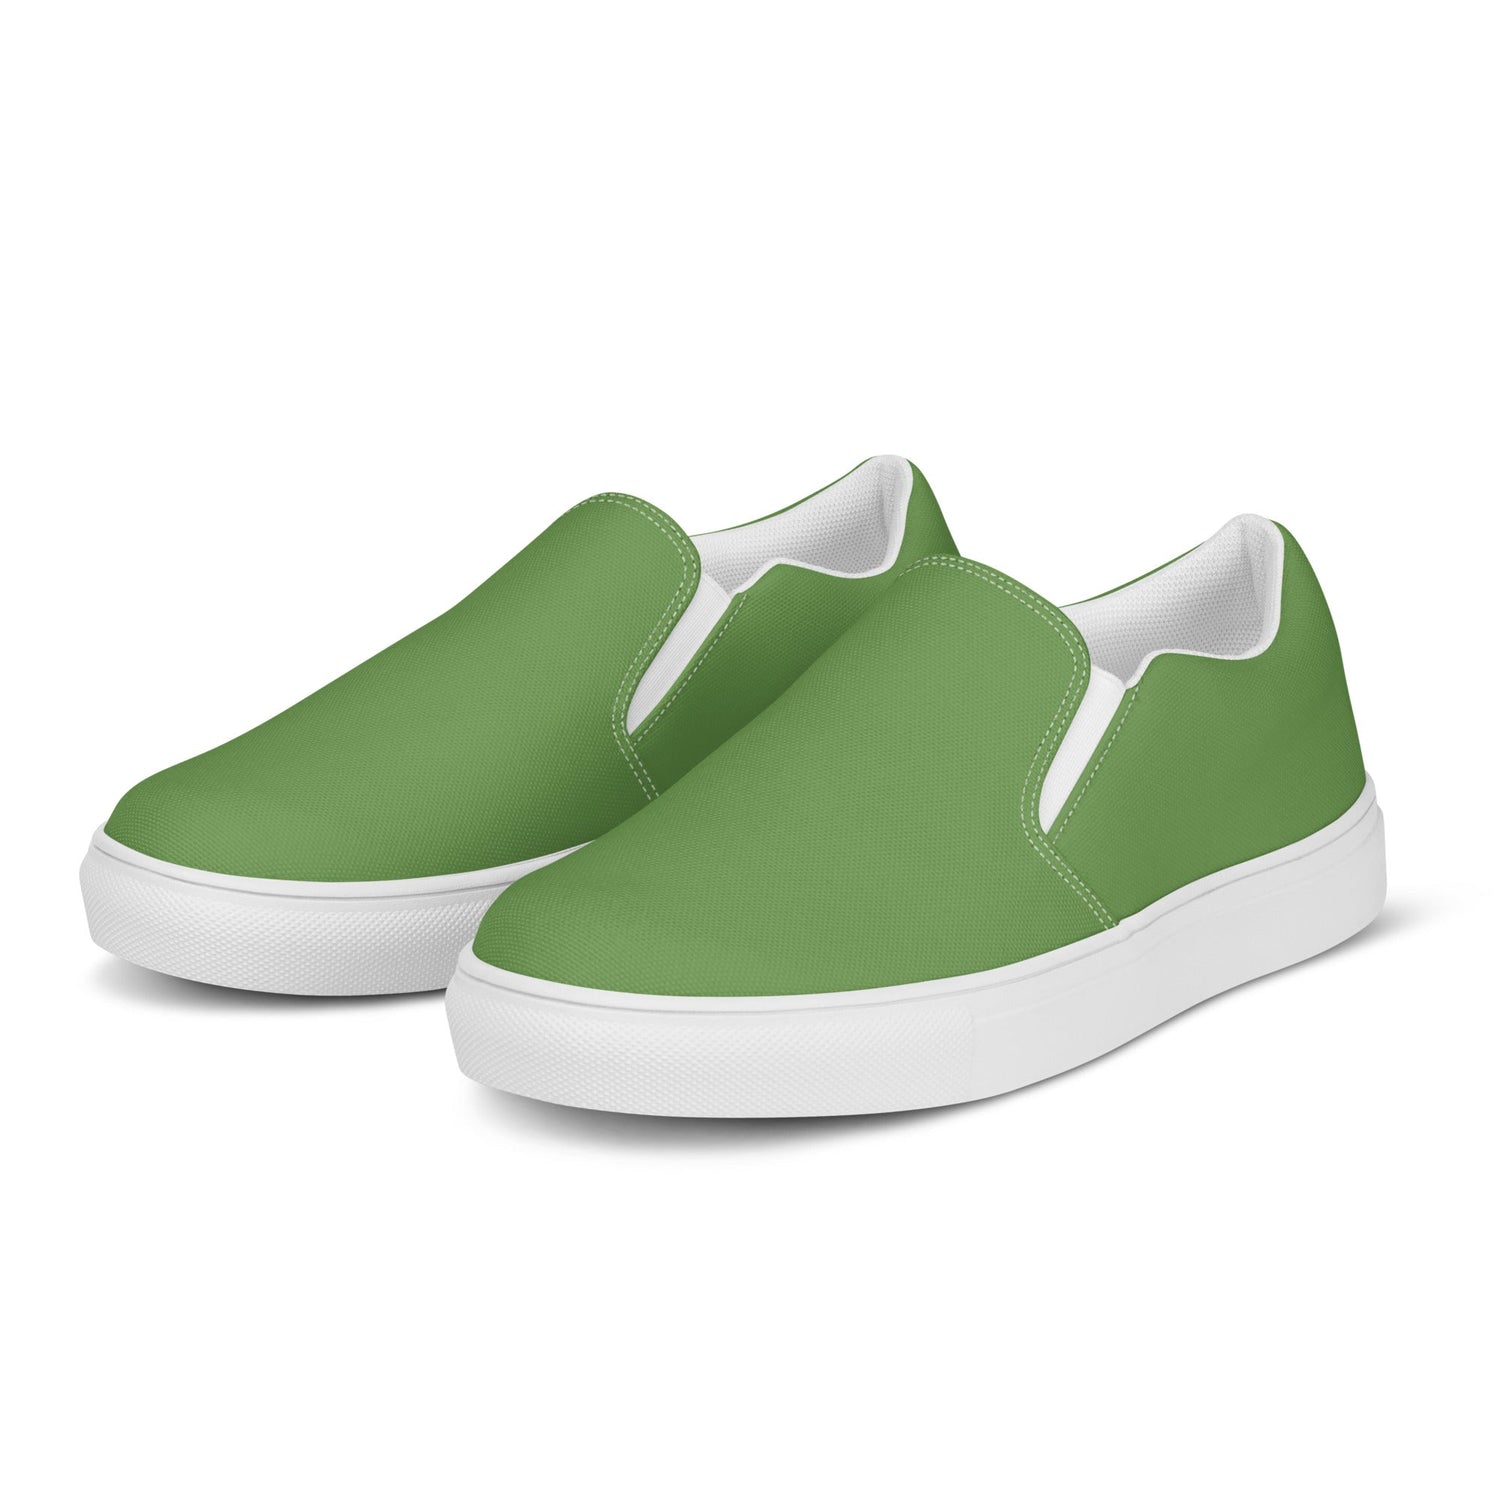 klasneakers Men’s slip-on canvas shoes - Dark Olive